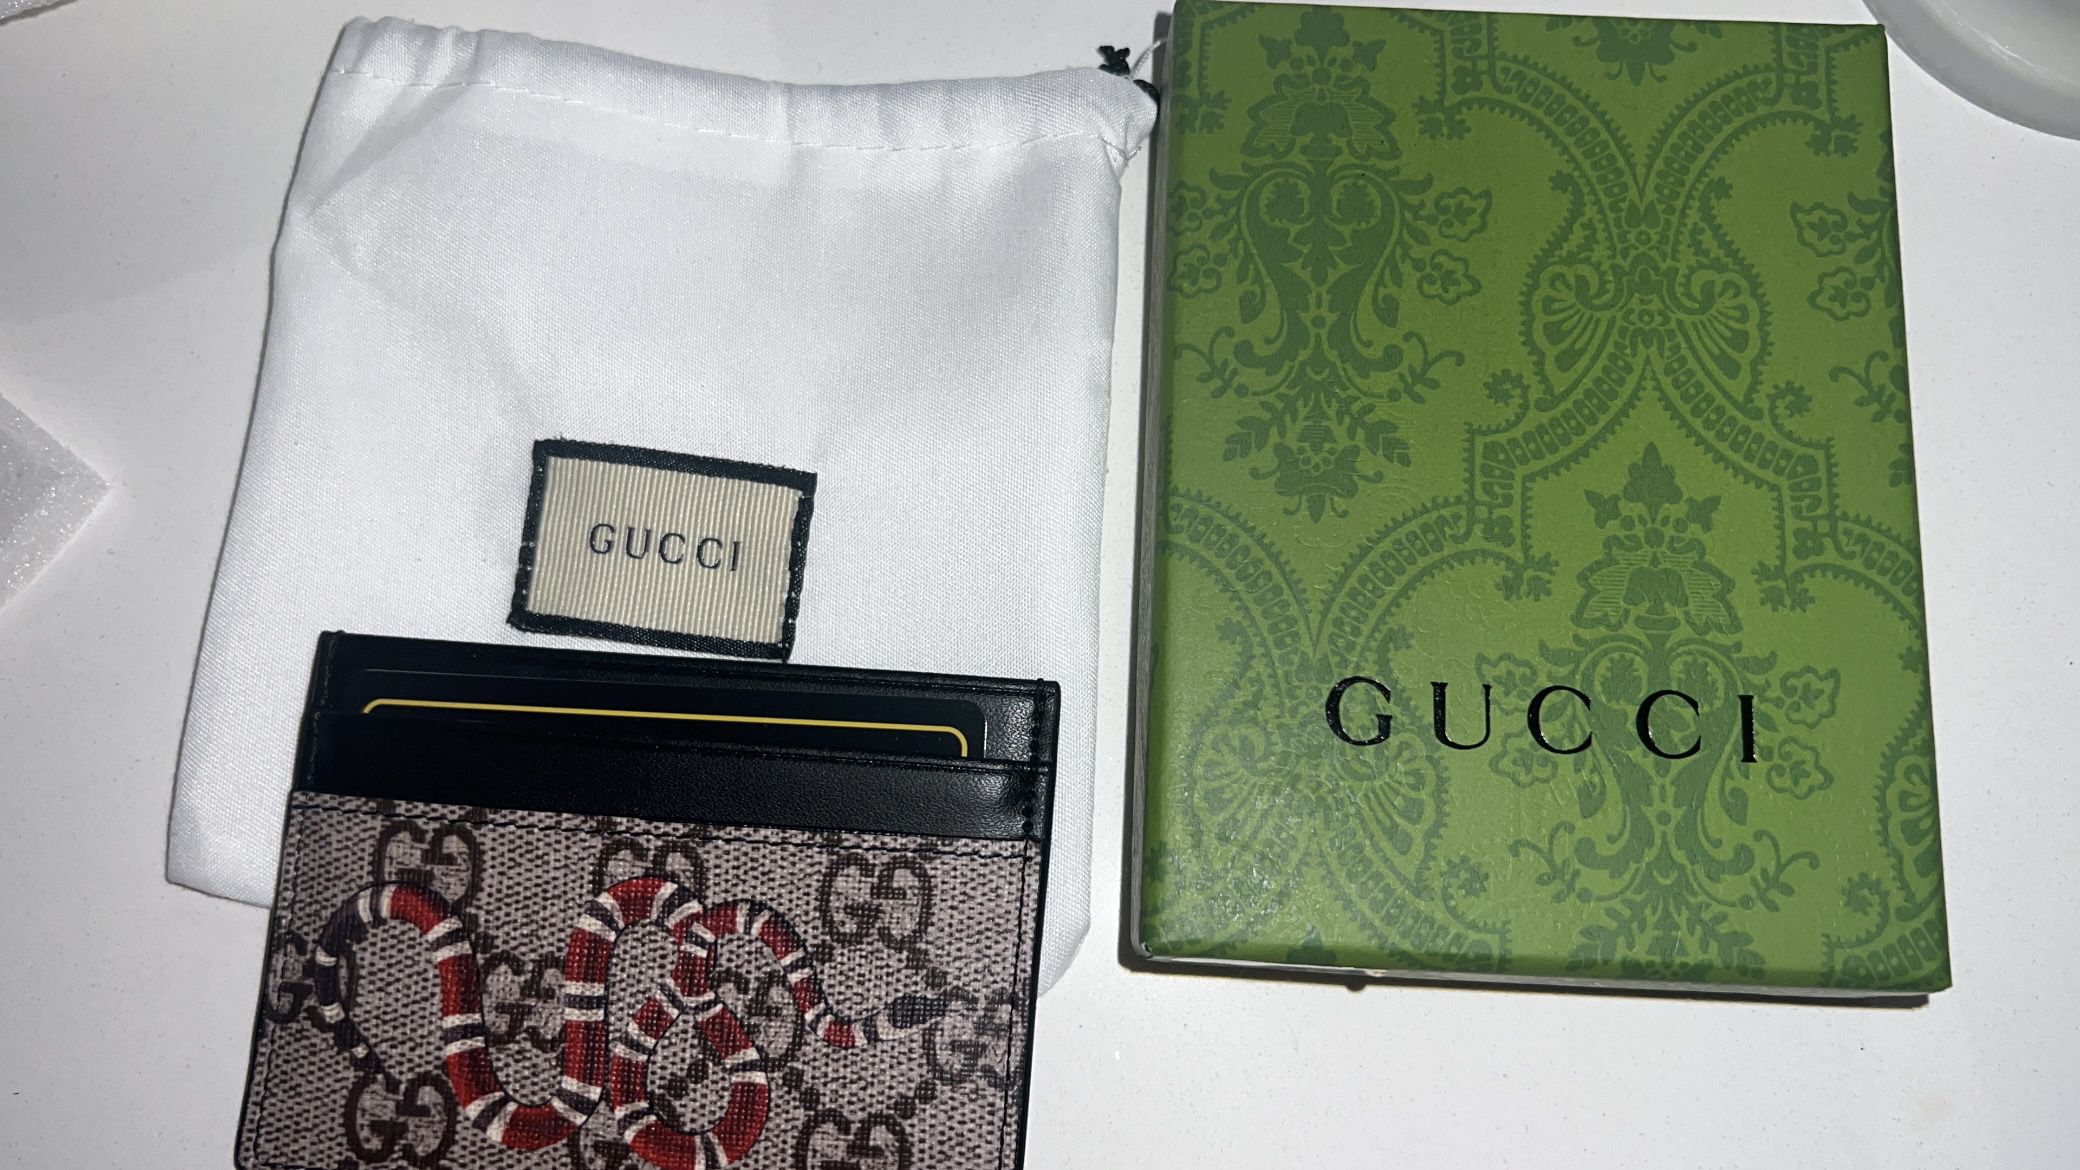 Brand New Gucci Cardholder